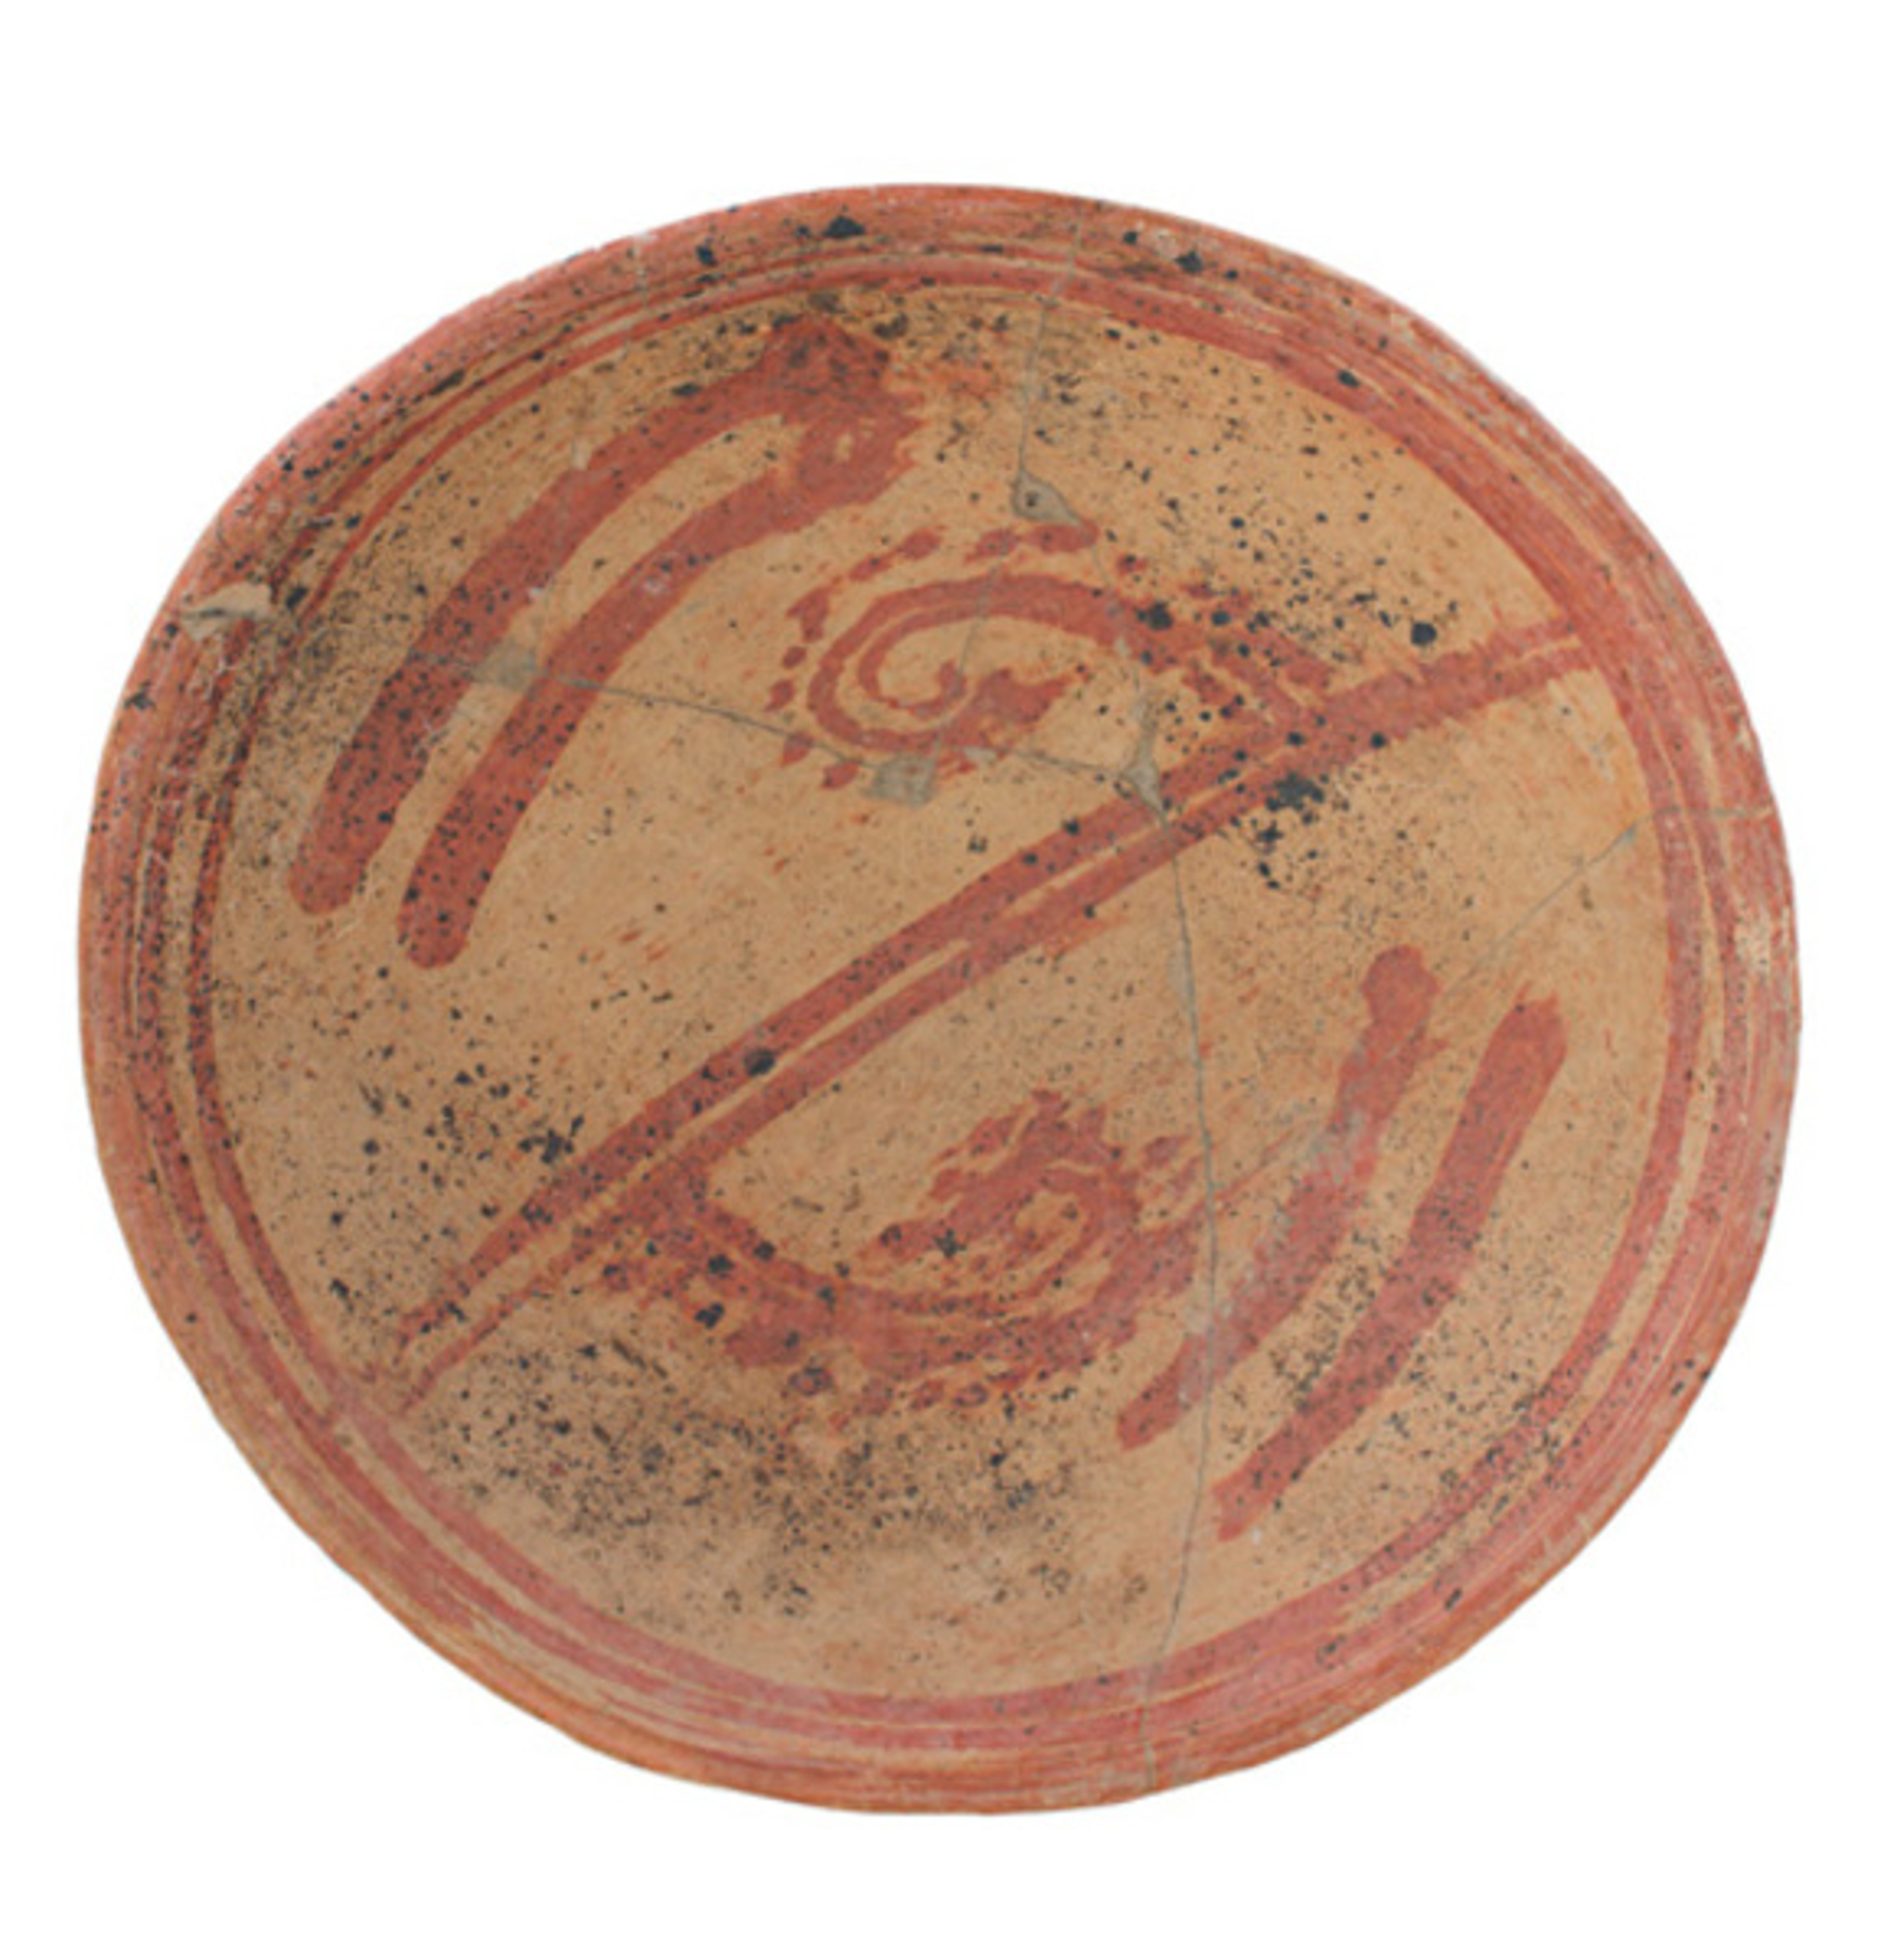 Bowl by Pre-Columbian